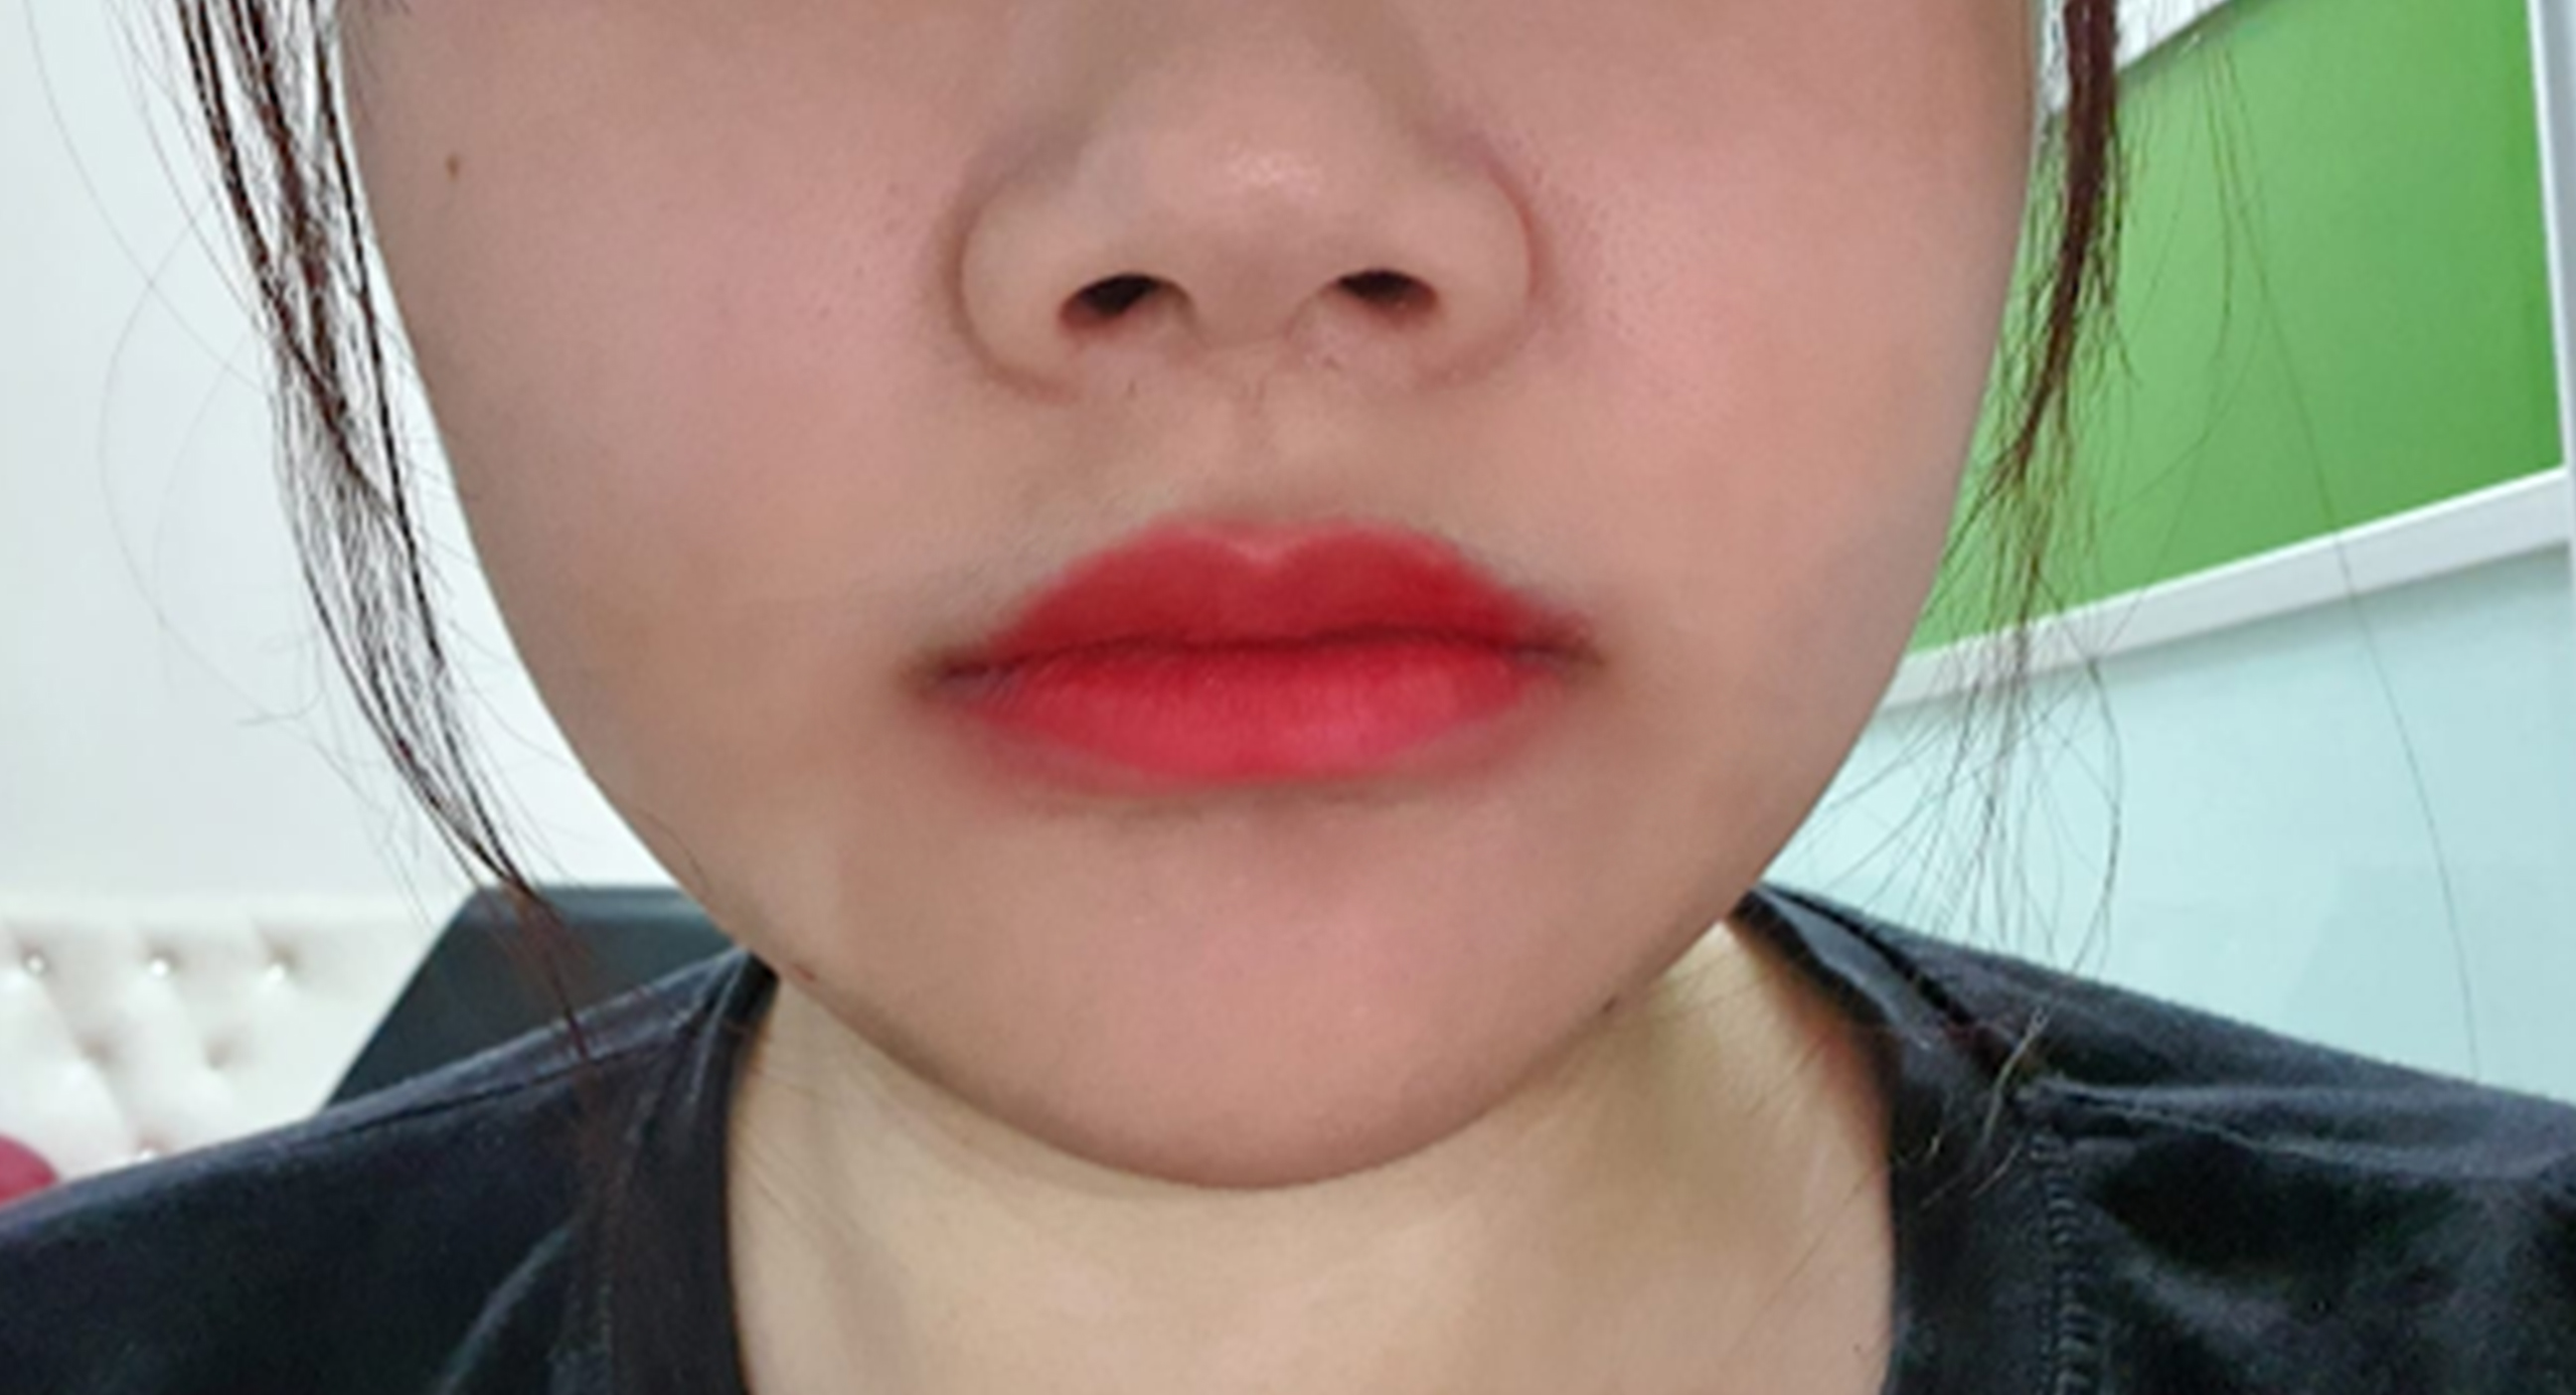 Eyeshadow dan lip balm untuk lipstik - 5 minute craft